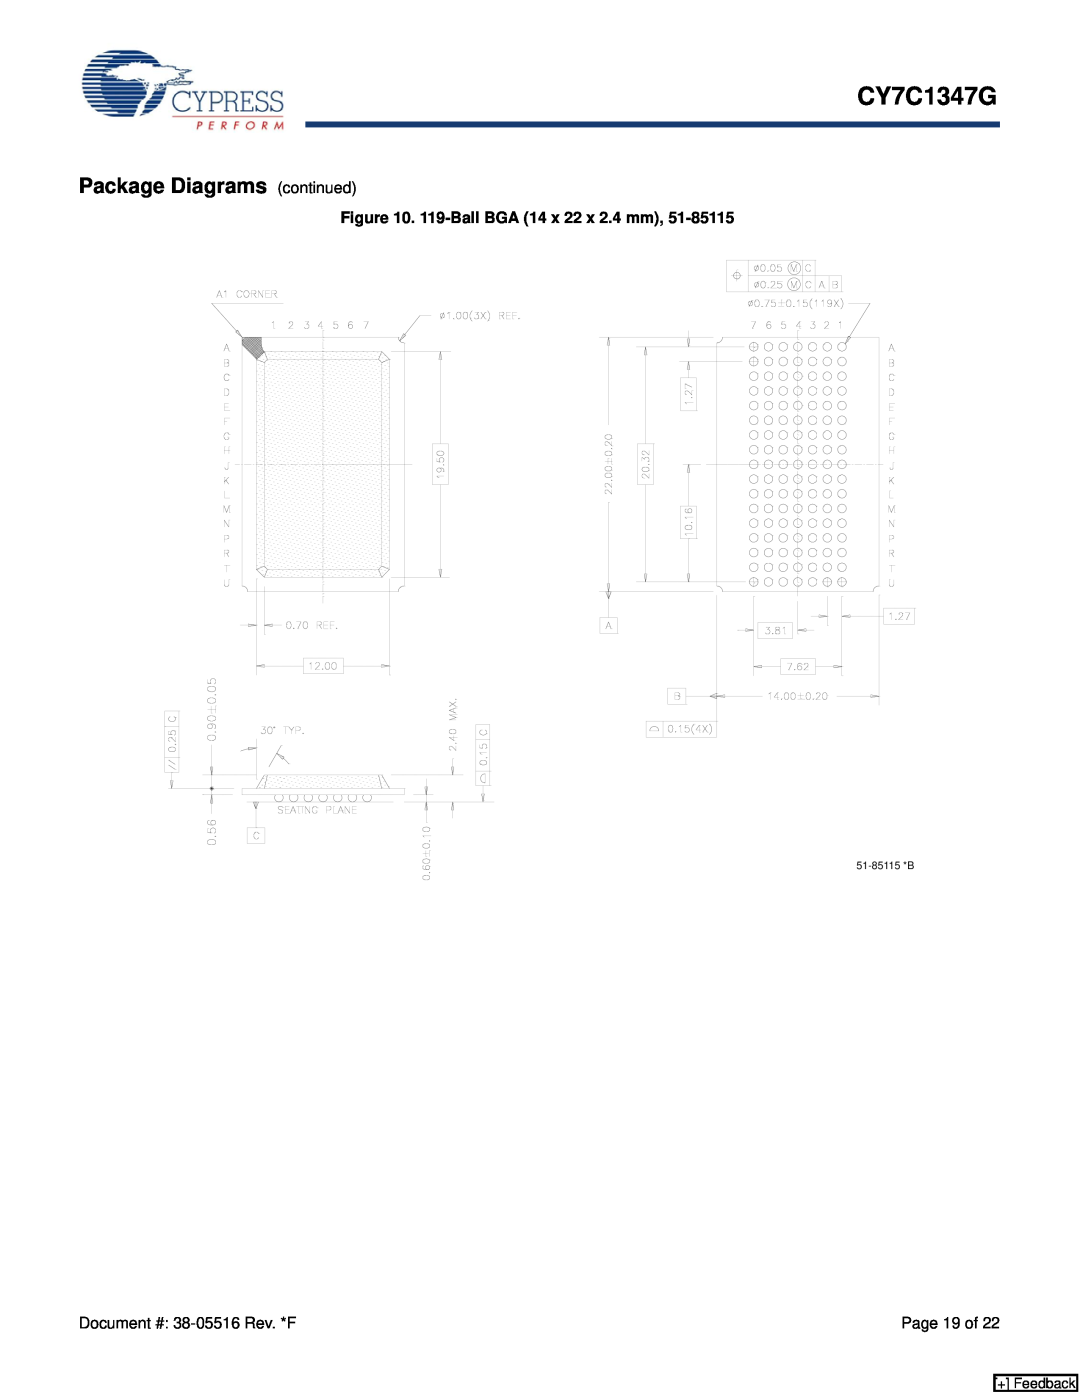 Cypress CY7C1347G manual Package Diagrams continued, 119-Ball BGA 14 x 22 x 2.4 mm, + Feedback 